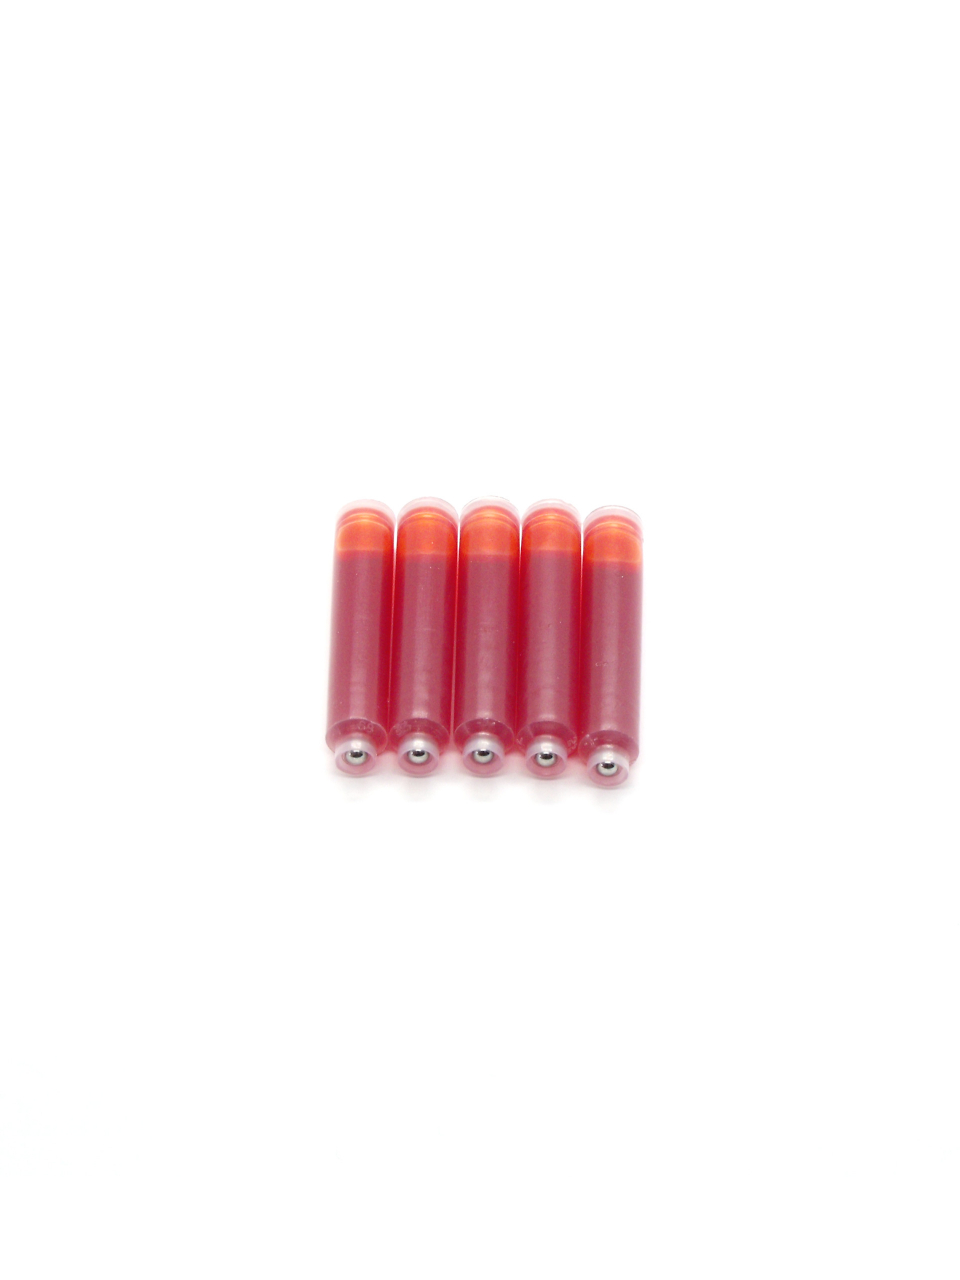 Top Ink Cartridges For Cartier Fountain Pens (Orange)